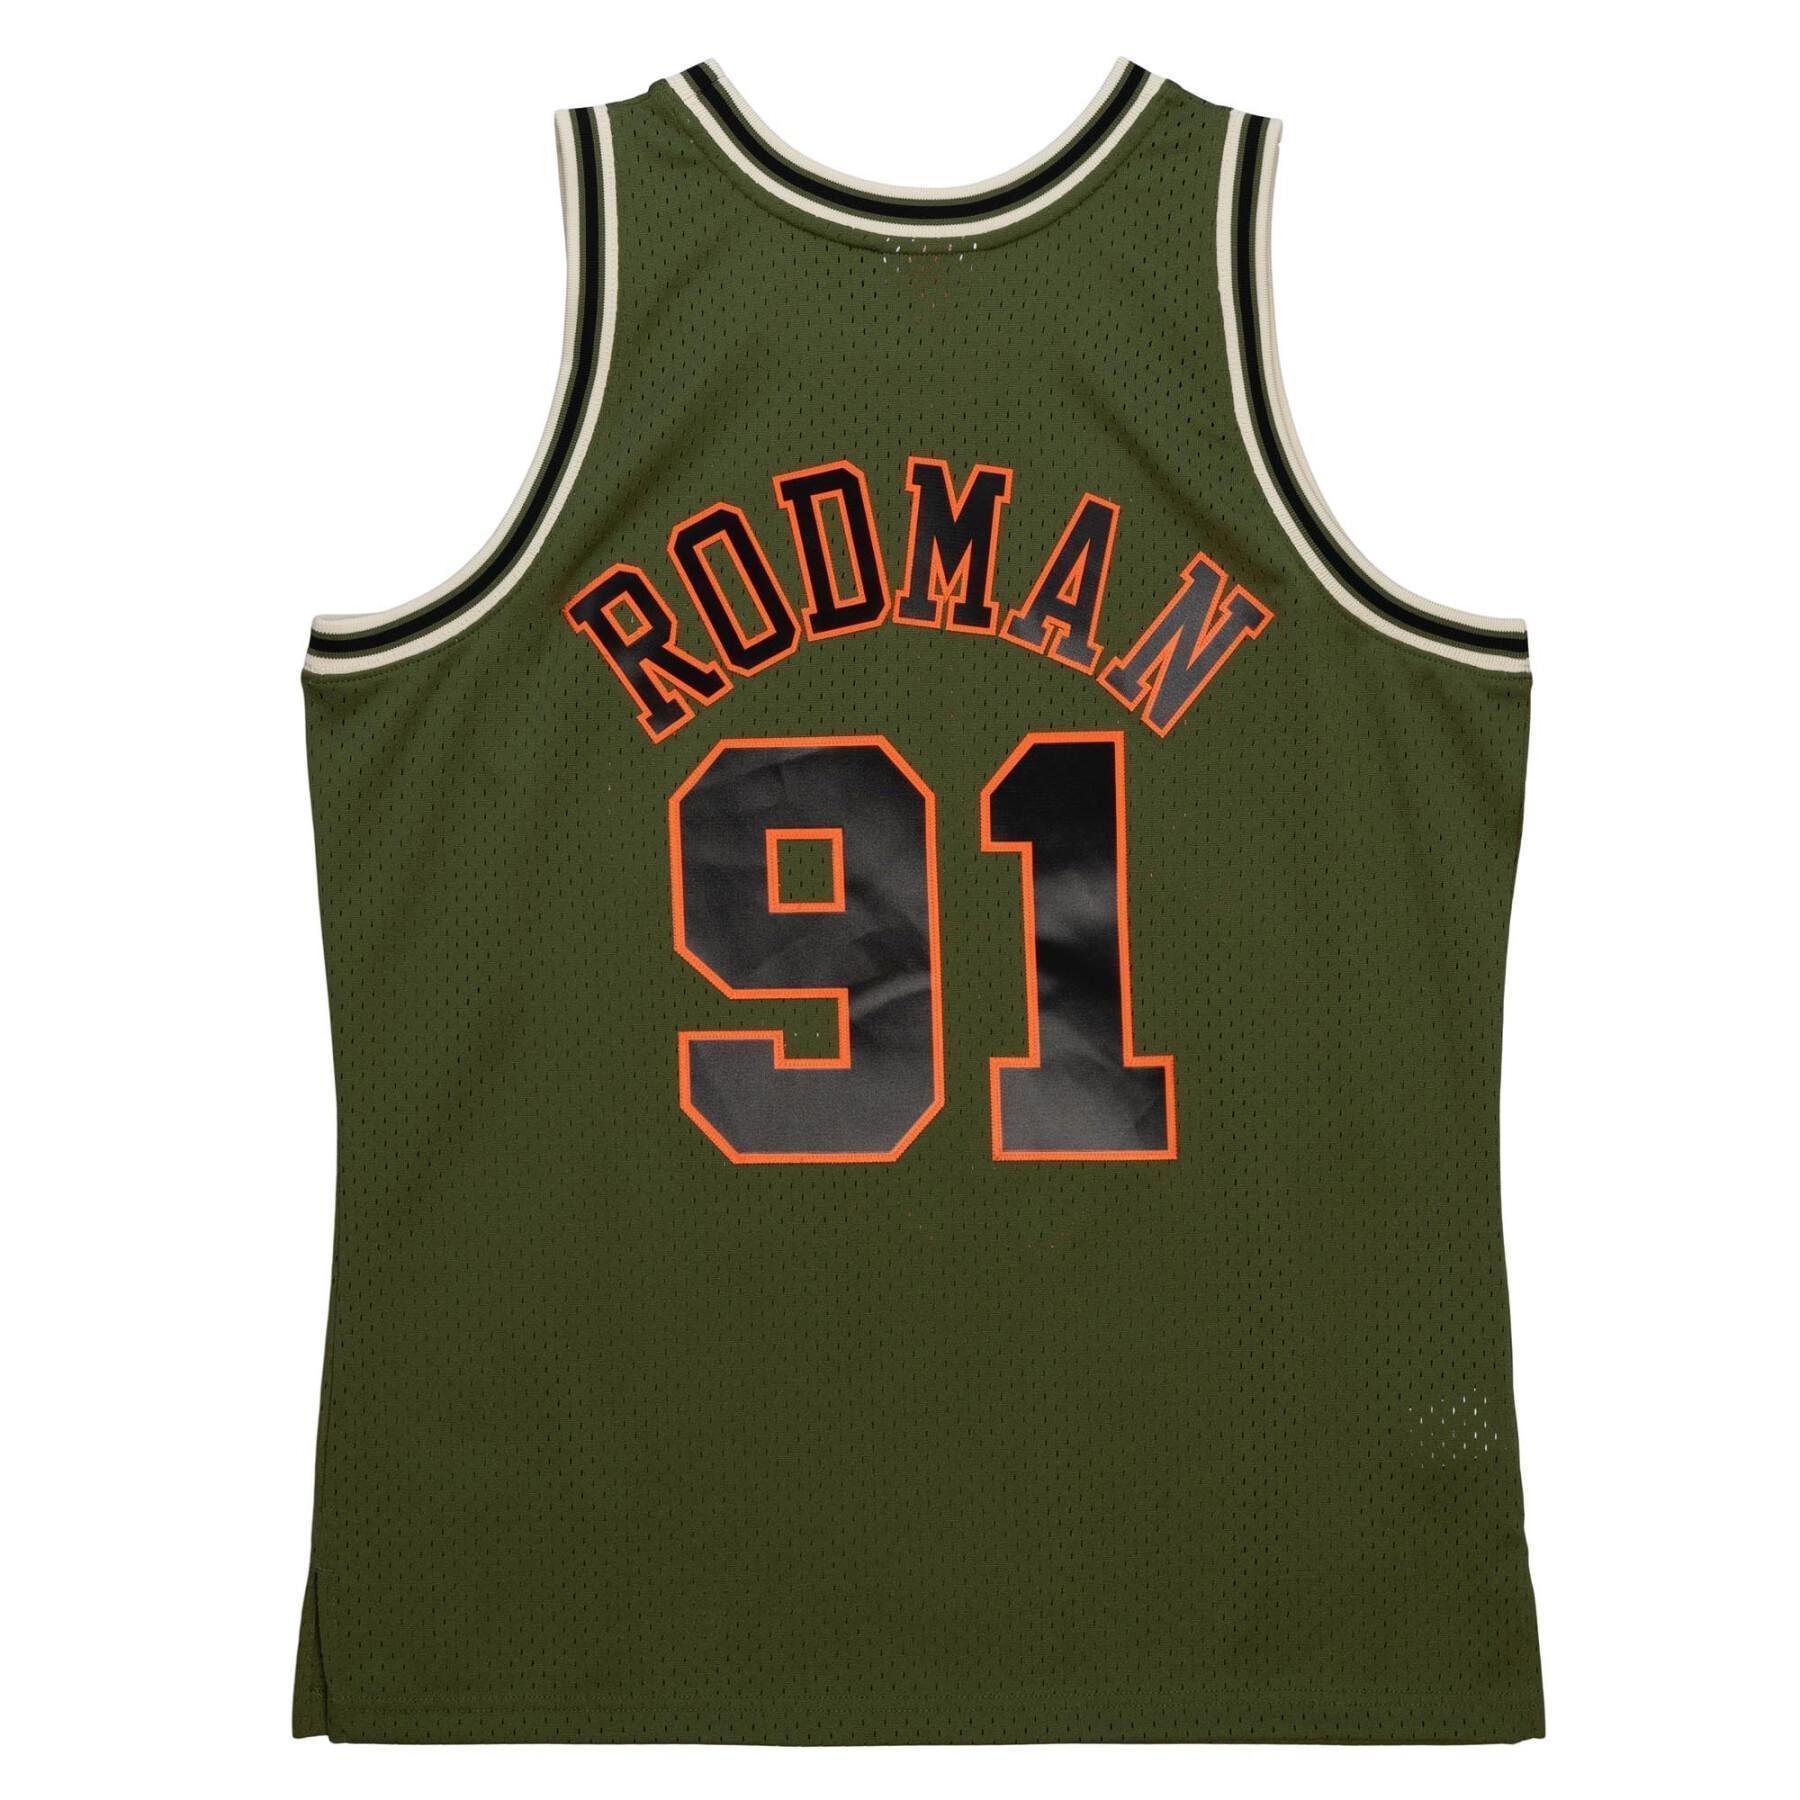 Camiseta Chicago Bulls Dennis Rodman 1997/98